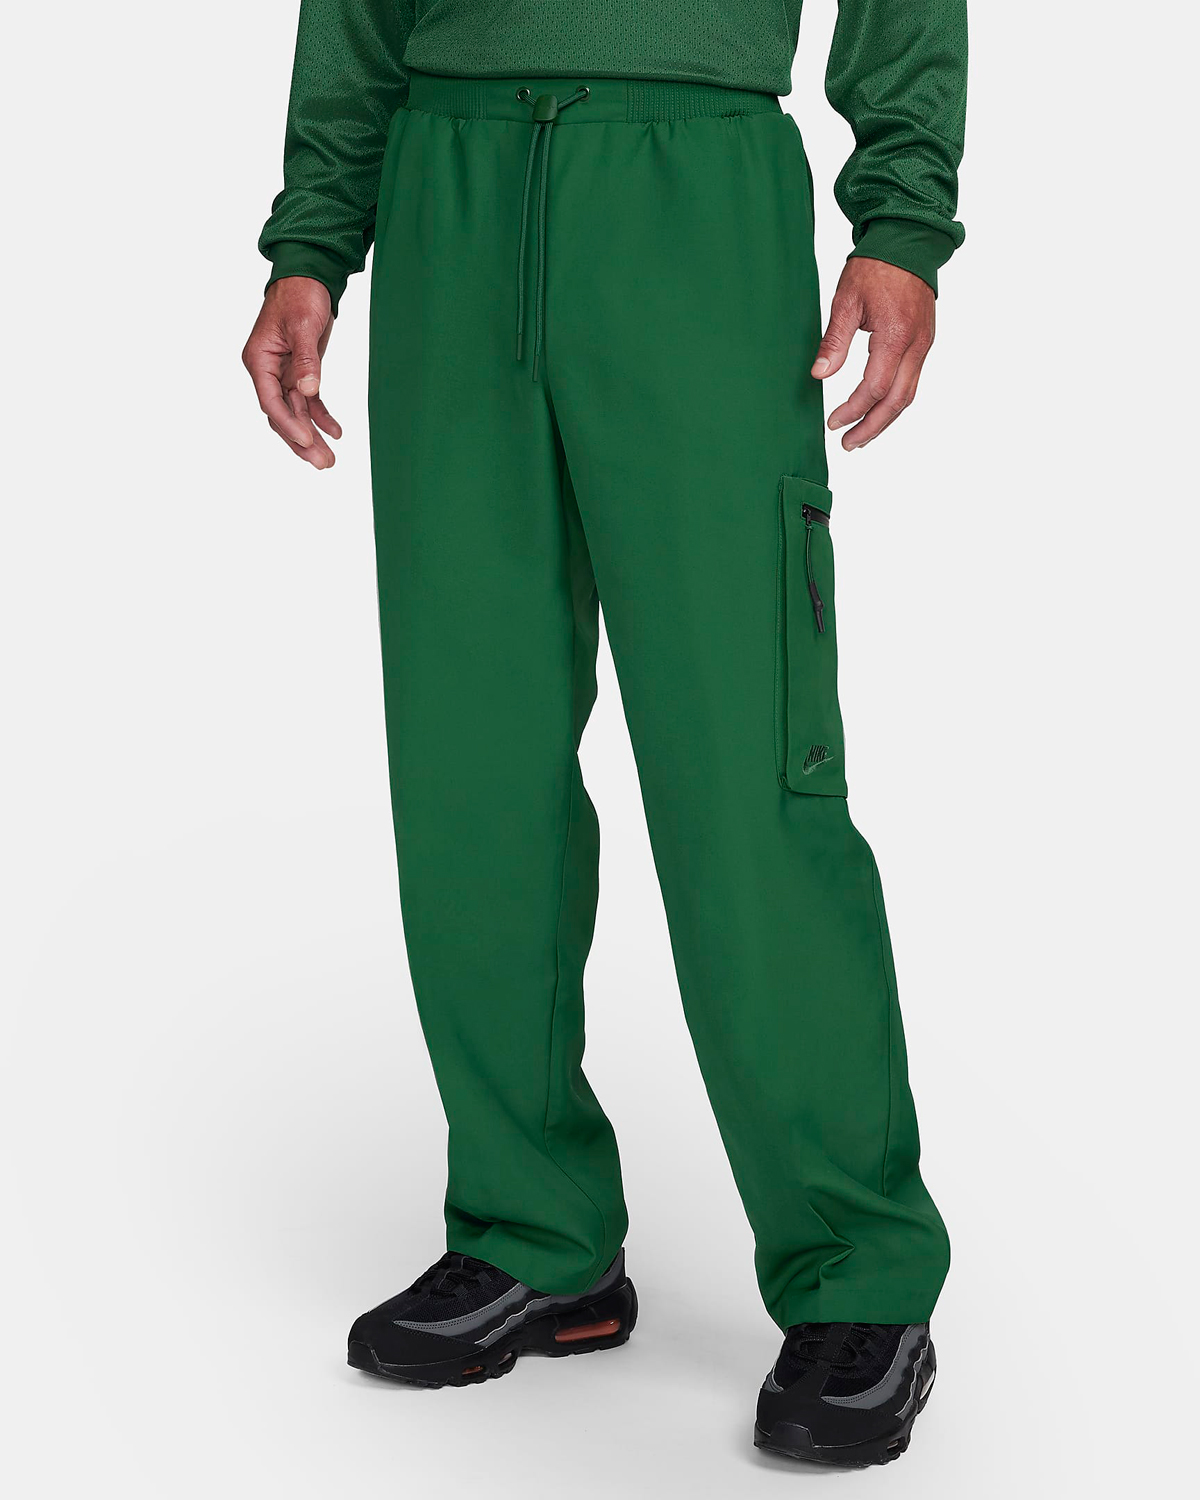 Nike-Sportswear-Tech-Pack-Woven-Utility-Pants-Fir-Green